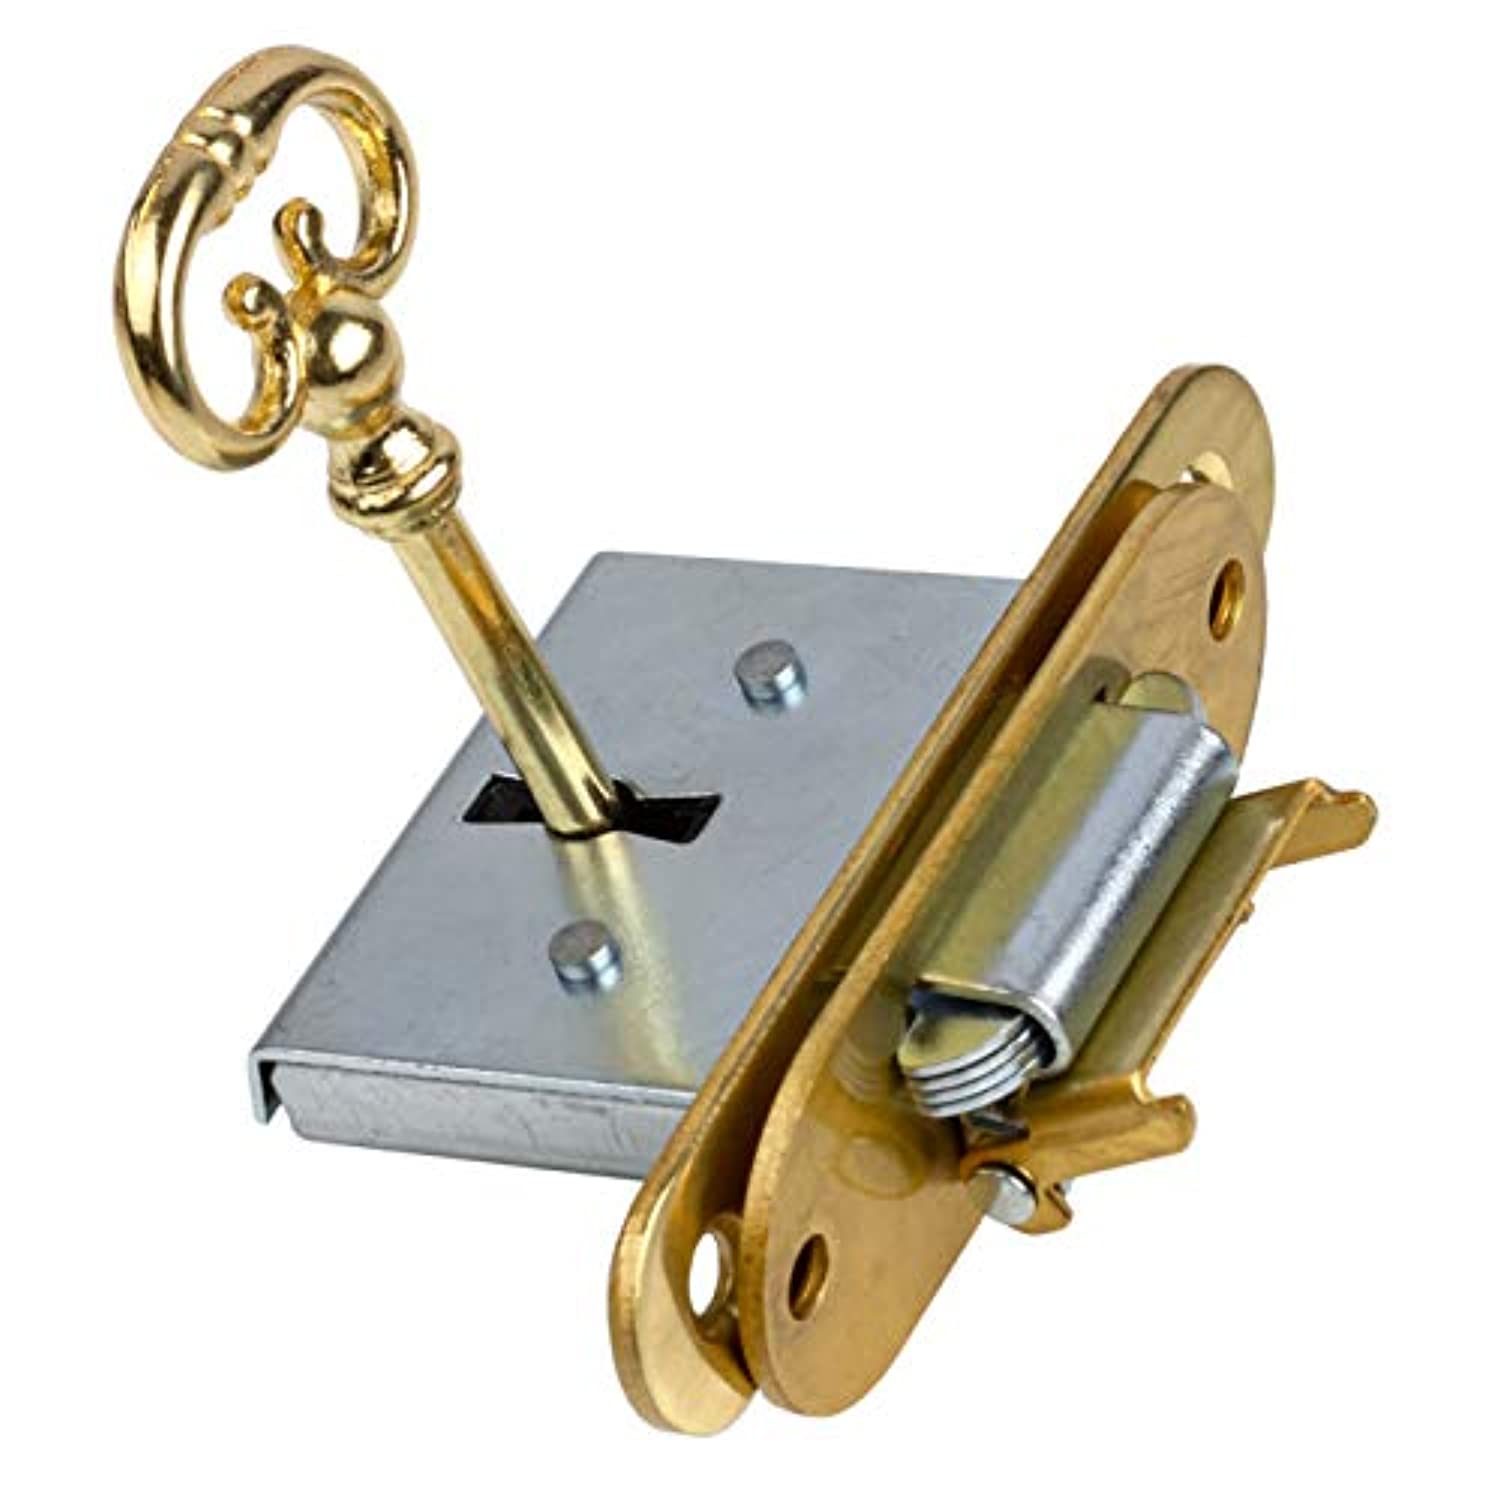 UNIQANTIQ Hardware Supply Full Mortise Lock with Skeleton Key UA-034-L